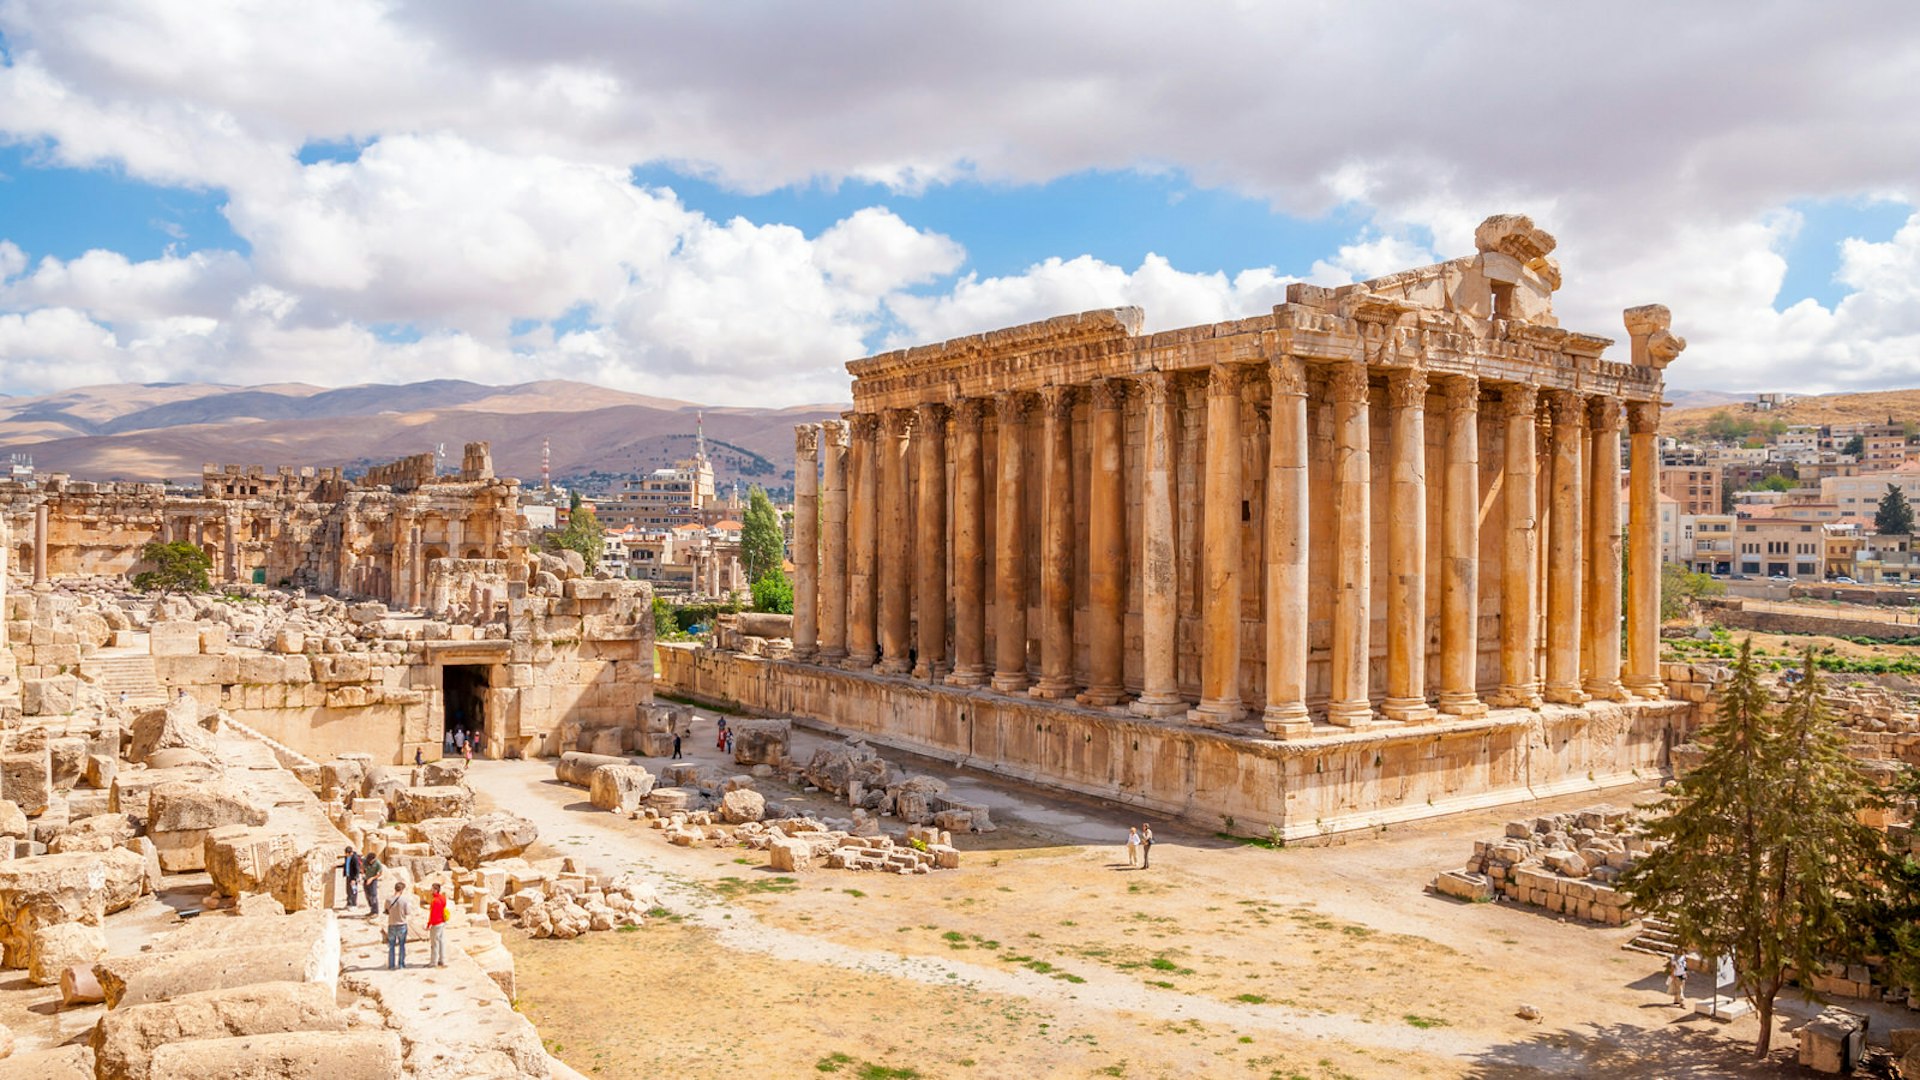 Bacchus temple at the Roman ancient ruins of Baalbek, Lebanon © Milonk / Shutterstock